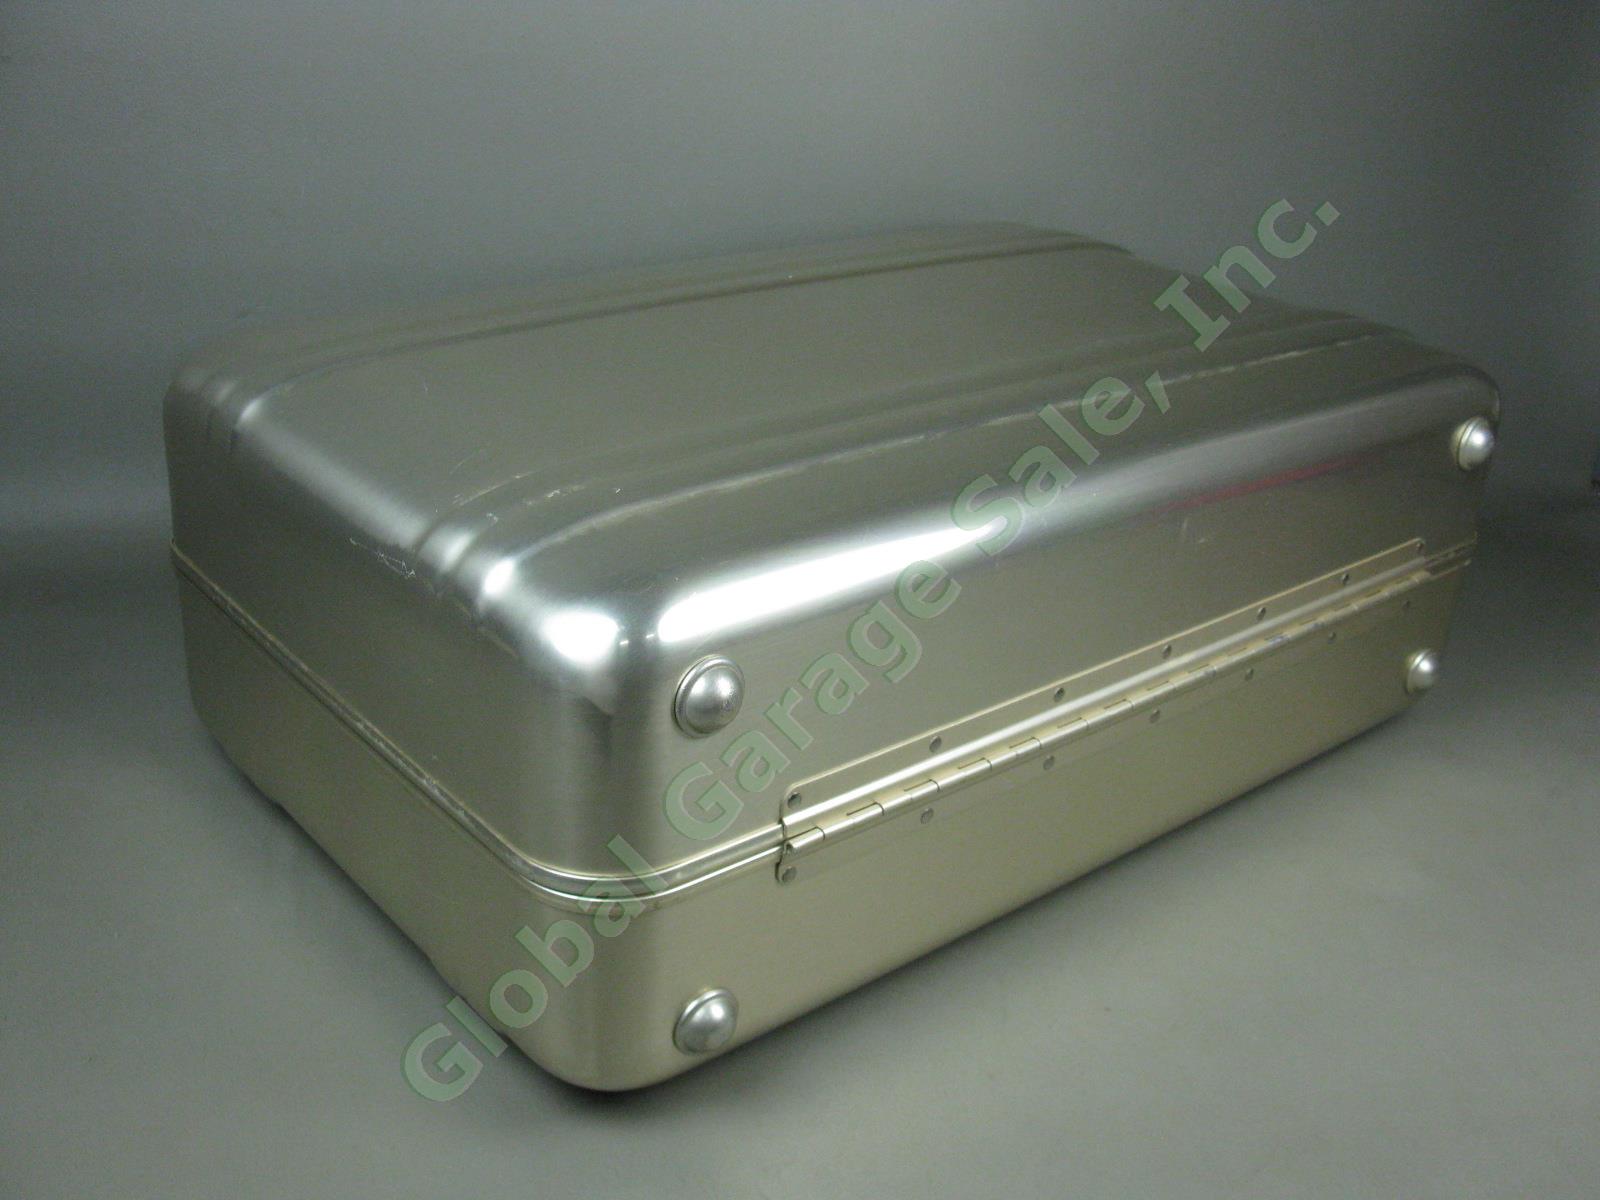 Zero Halliburton Presto Aluminum Combo Lock Briefcase Suitcase Luggage 21x13x8 5